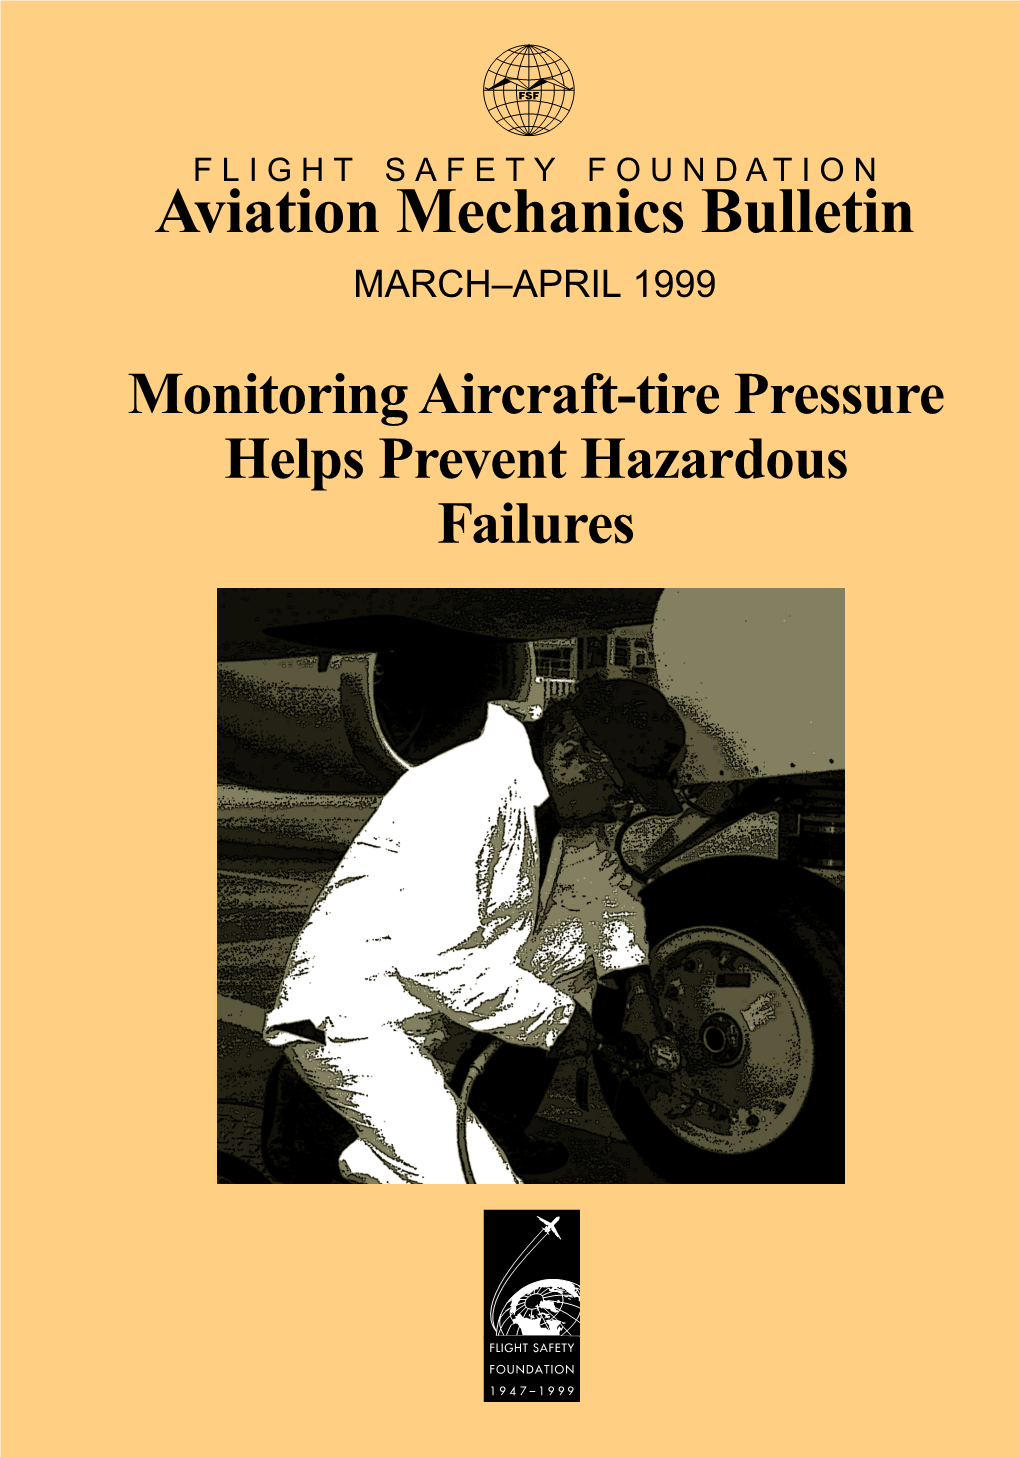 Aviation Mechanics Bulletin March-April 1999